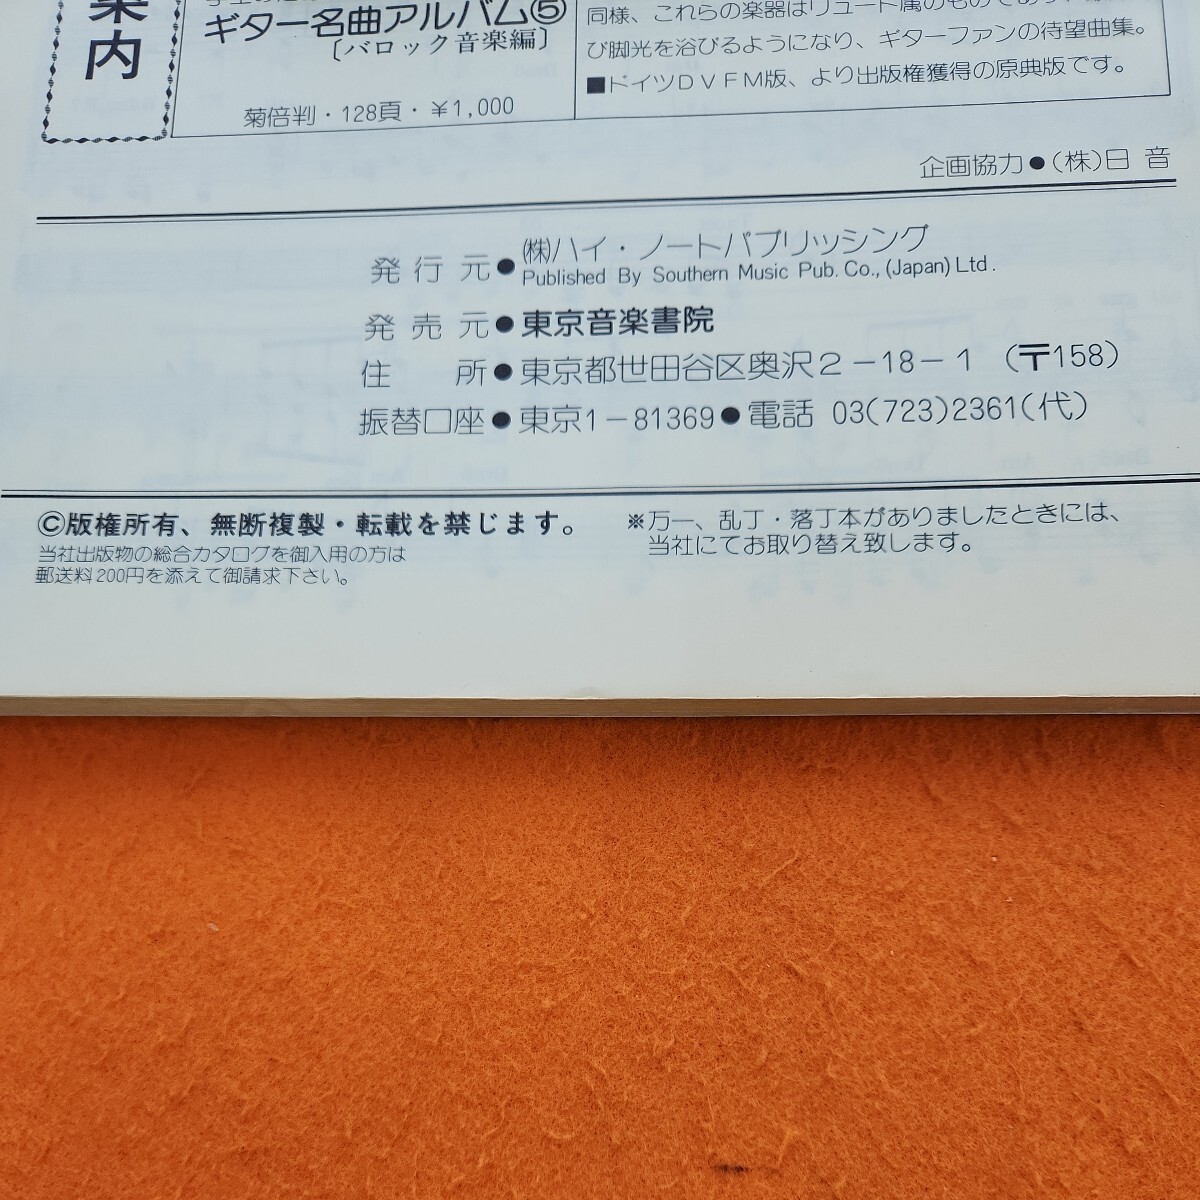 C08-144 LATINMOODALBUM魅惑のラテンムートアルバムーベスト30曲東京音楽警浣_画像3